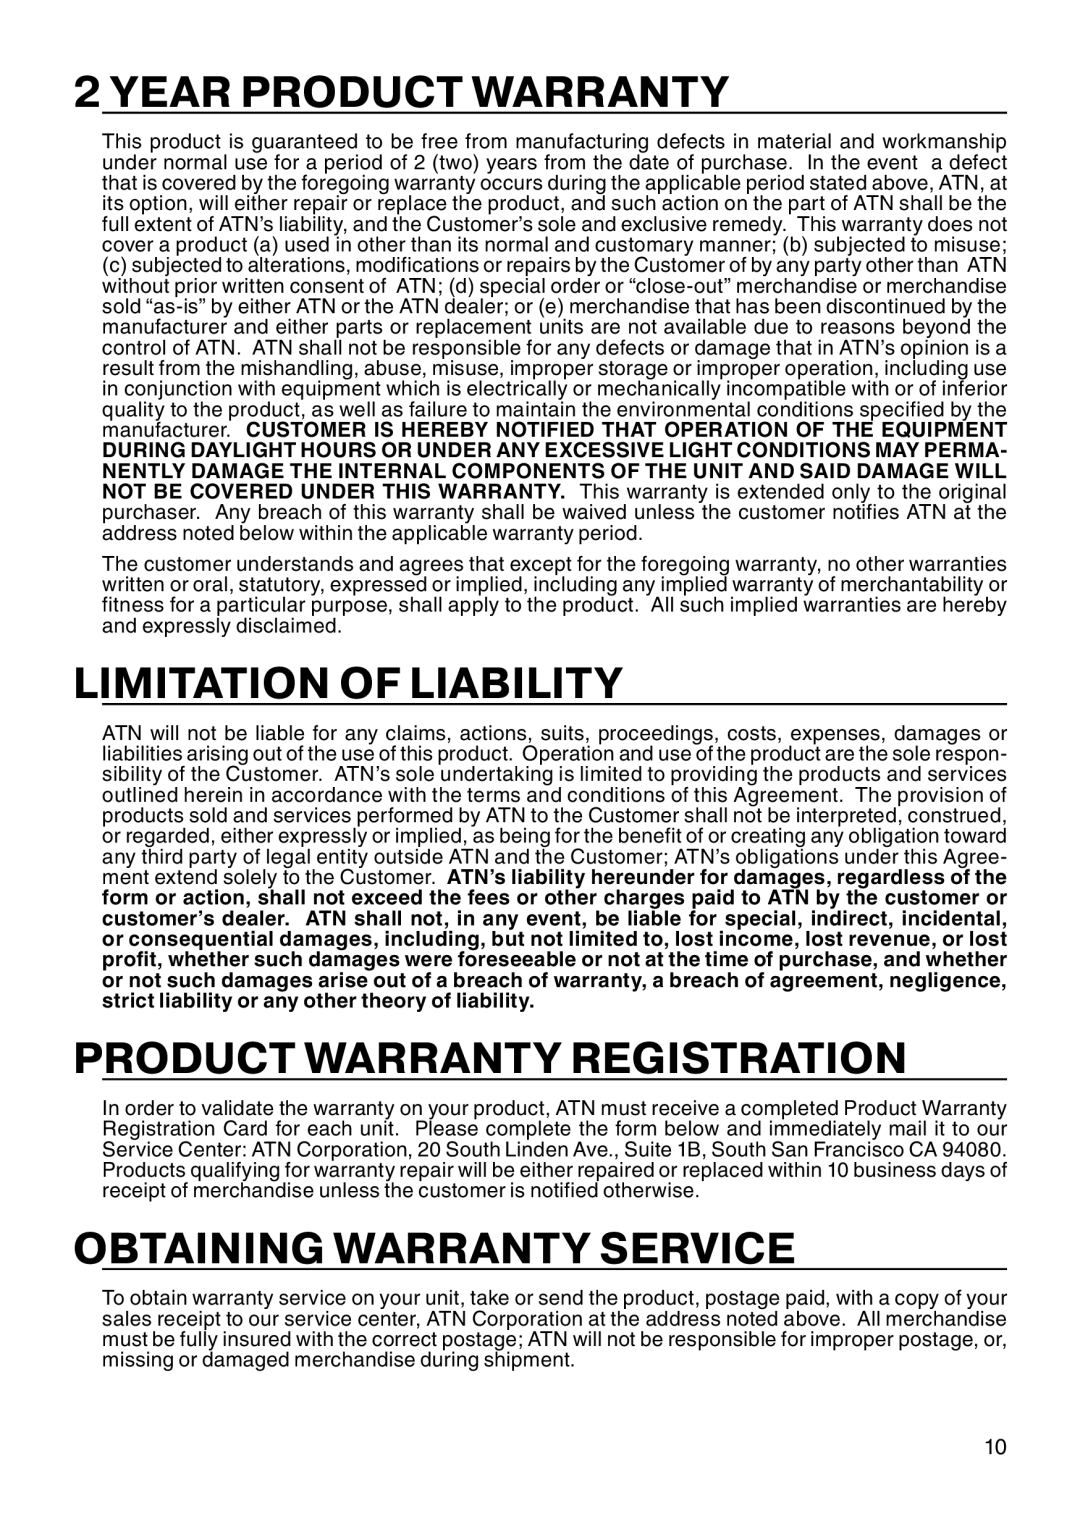 ATN Night Patriot manual Year Product Warranty, Limitation Of Liability, Product Warranty Registration 